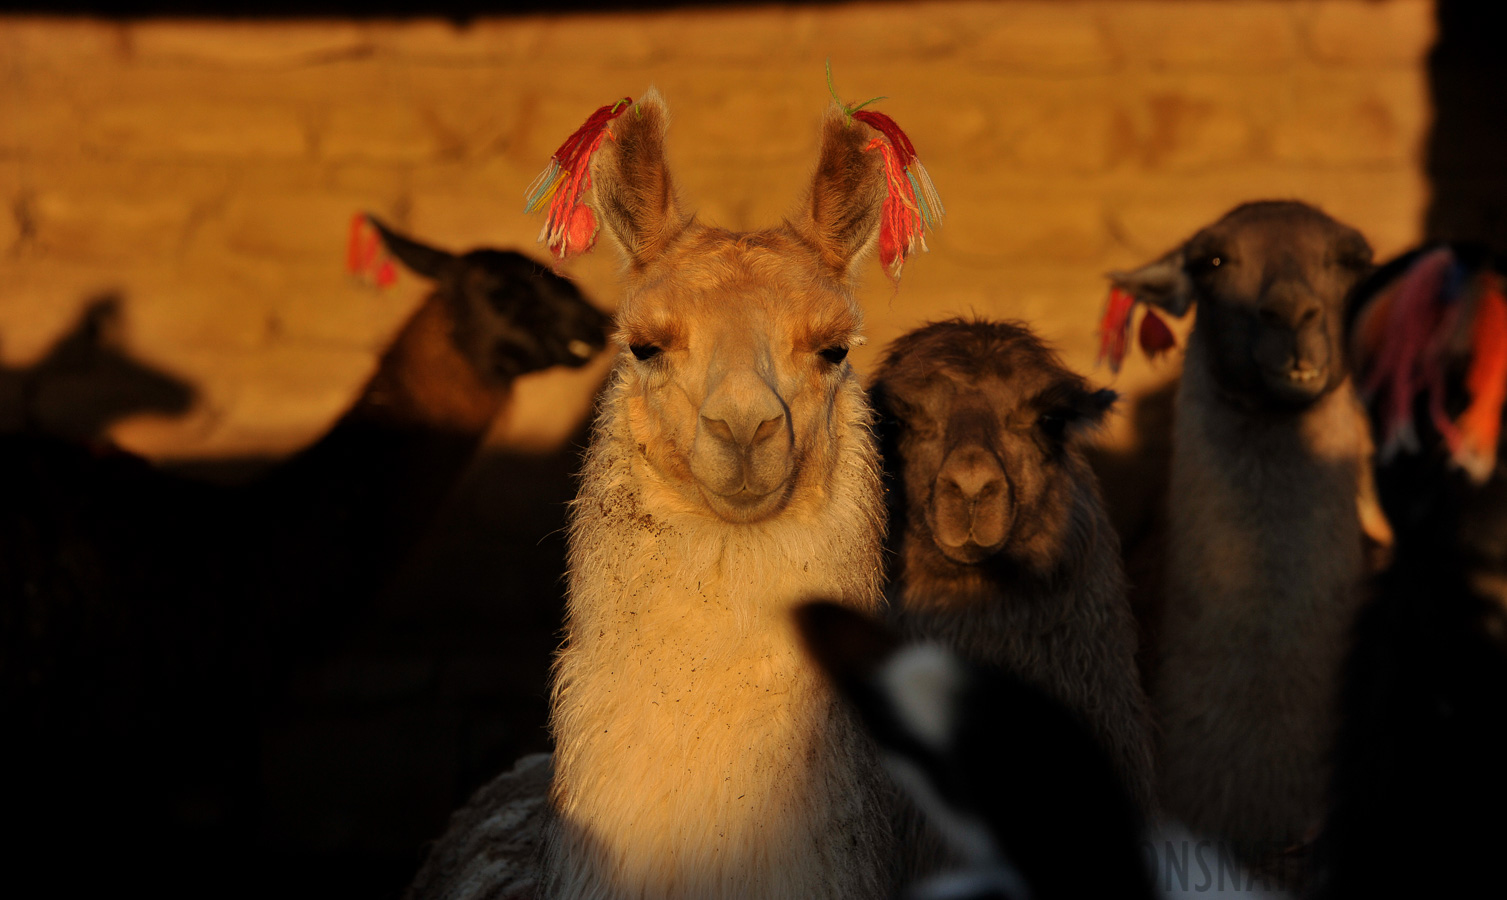 The lamas enjoy the warming sun [150 mm, 1/640 sec at f / 7.1, ISO 500]